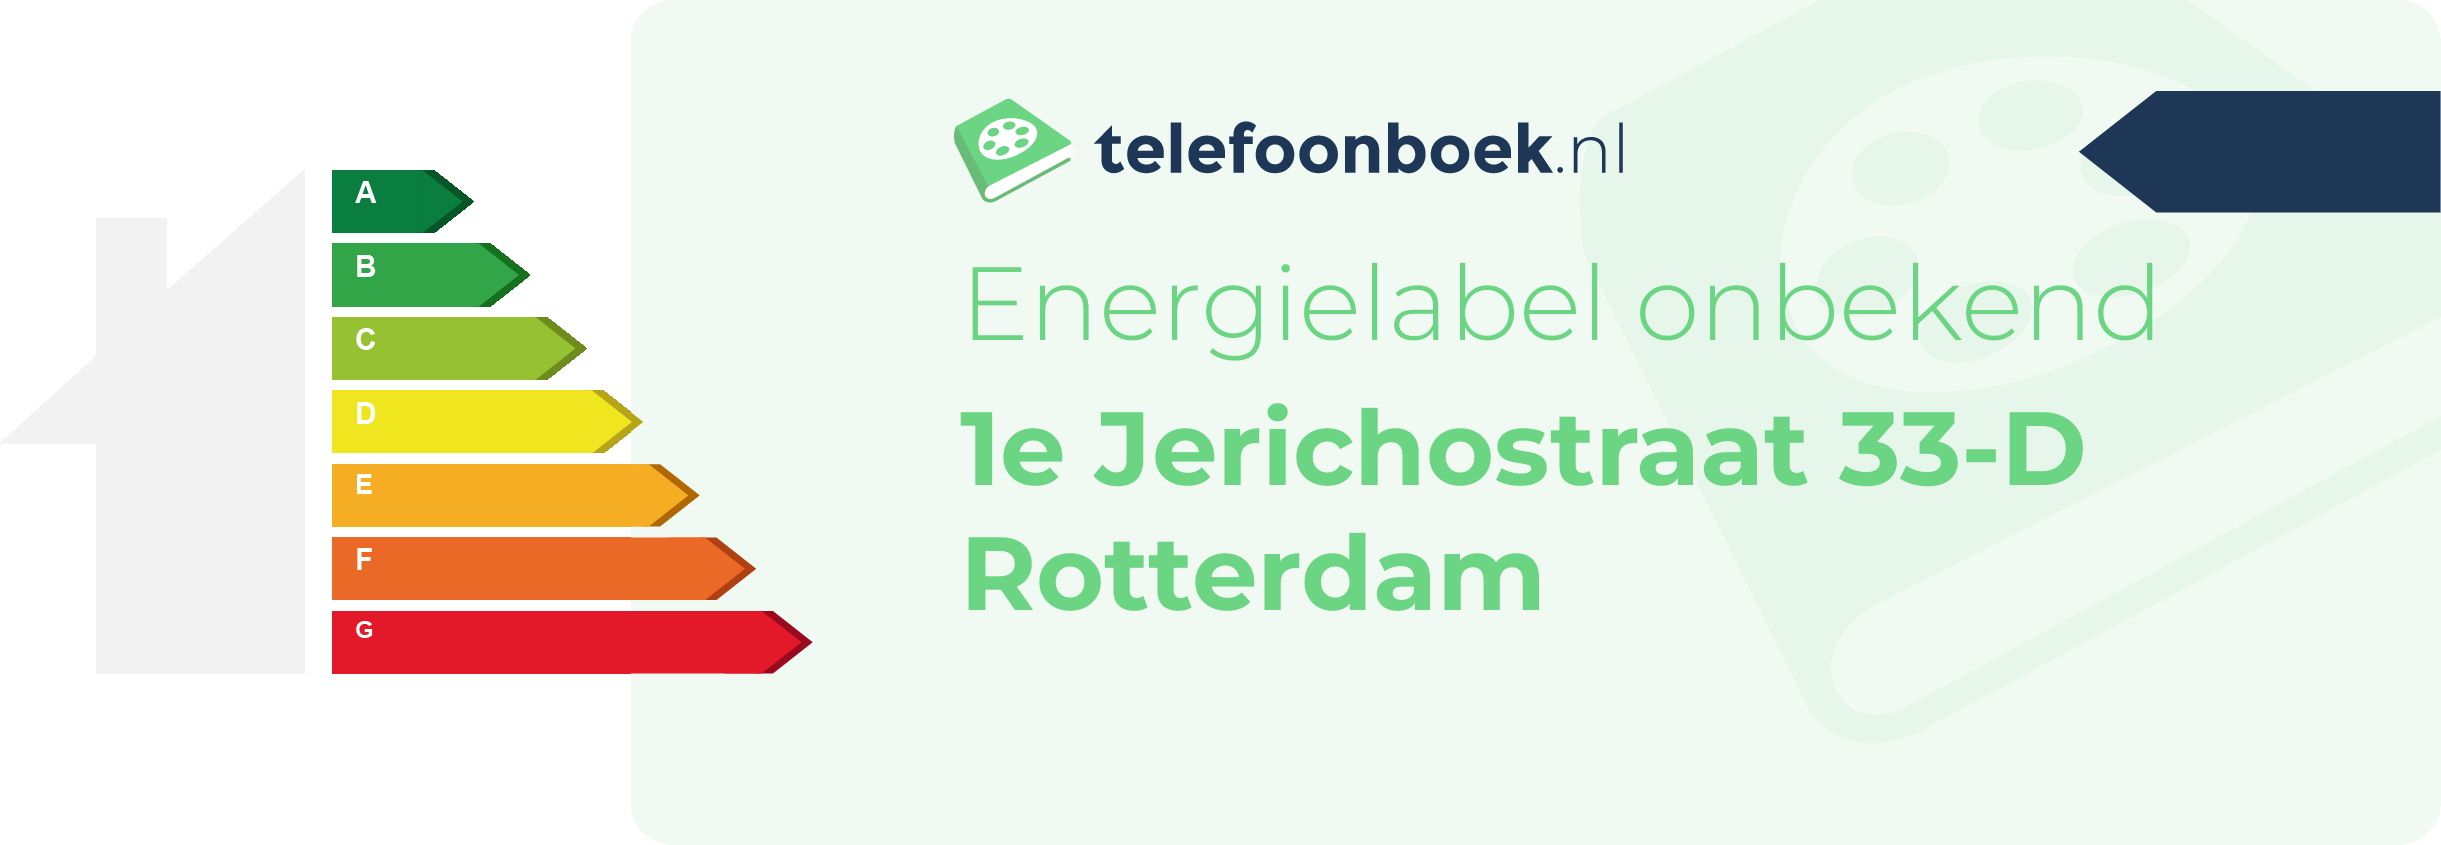 Energielabel 1e Jerichostraat 33-D Rotterdam